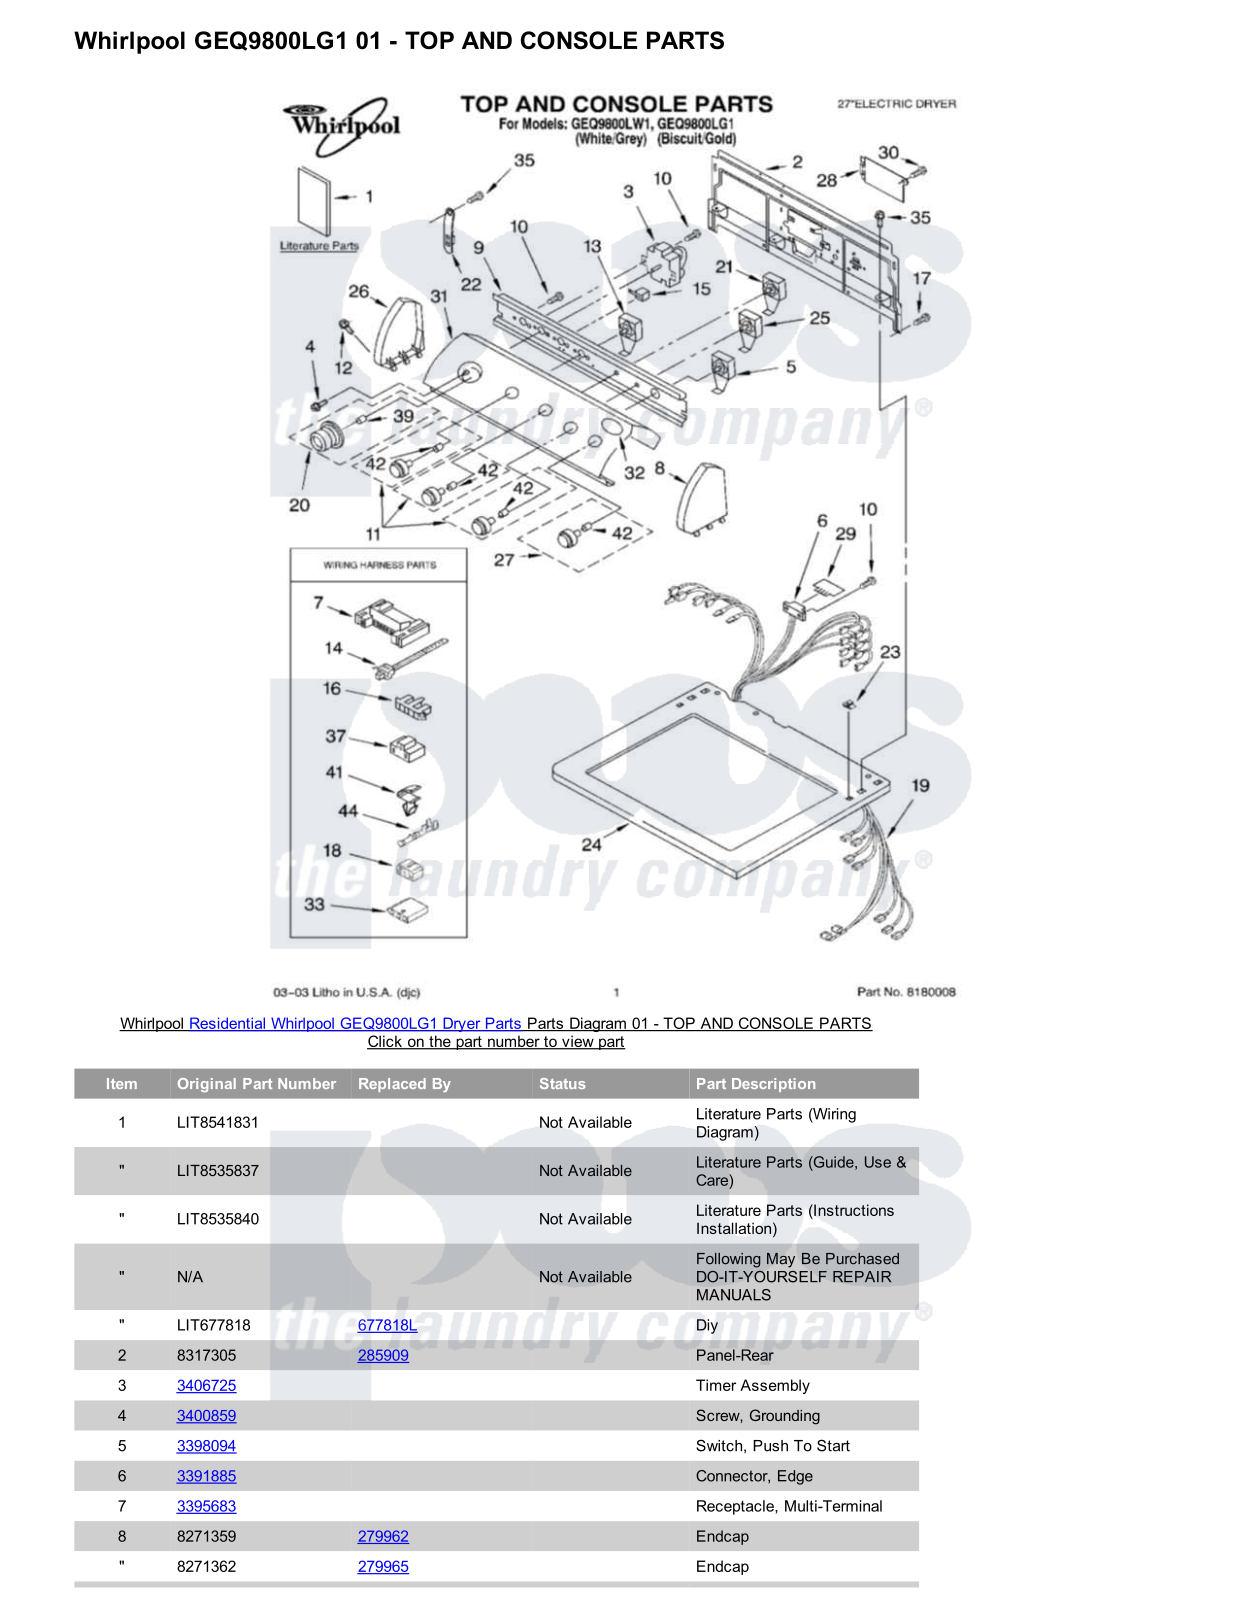 Whirlpool GEQ9800LG1 Parts Diagram